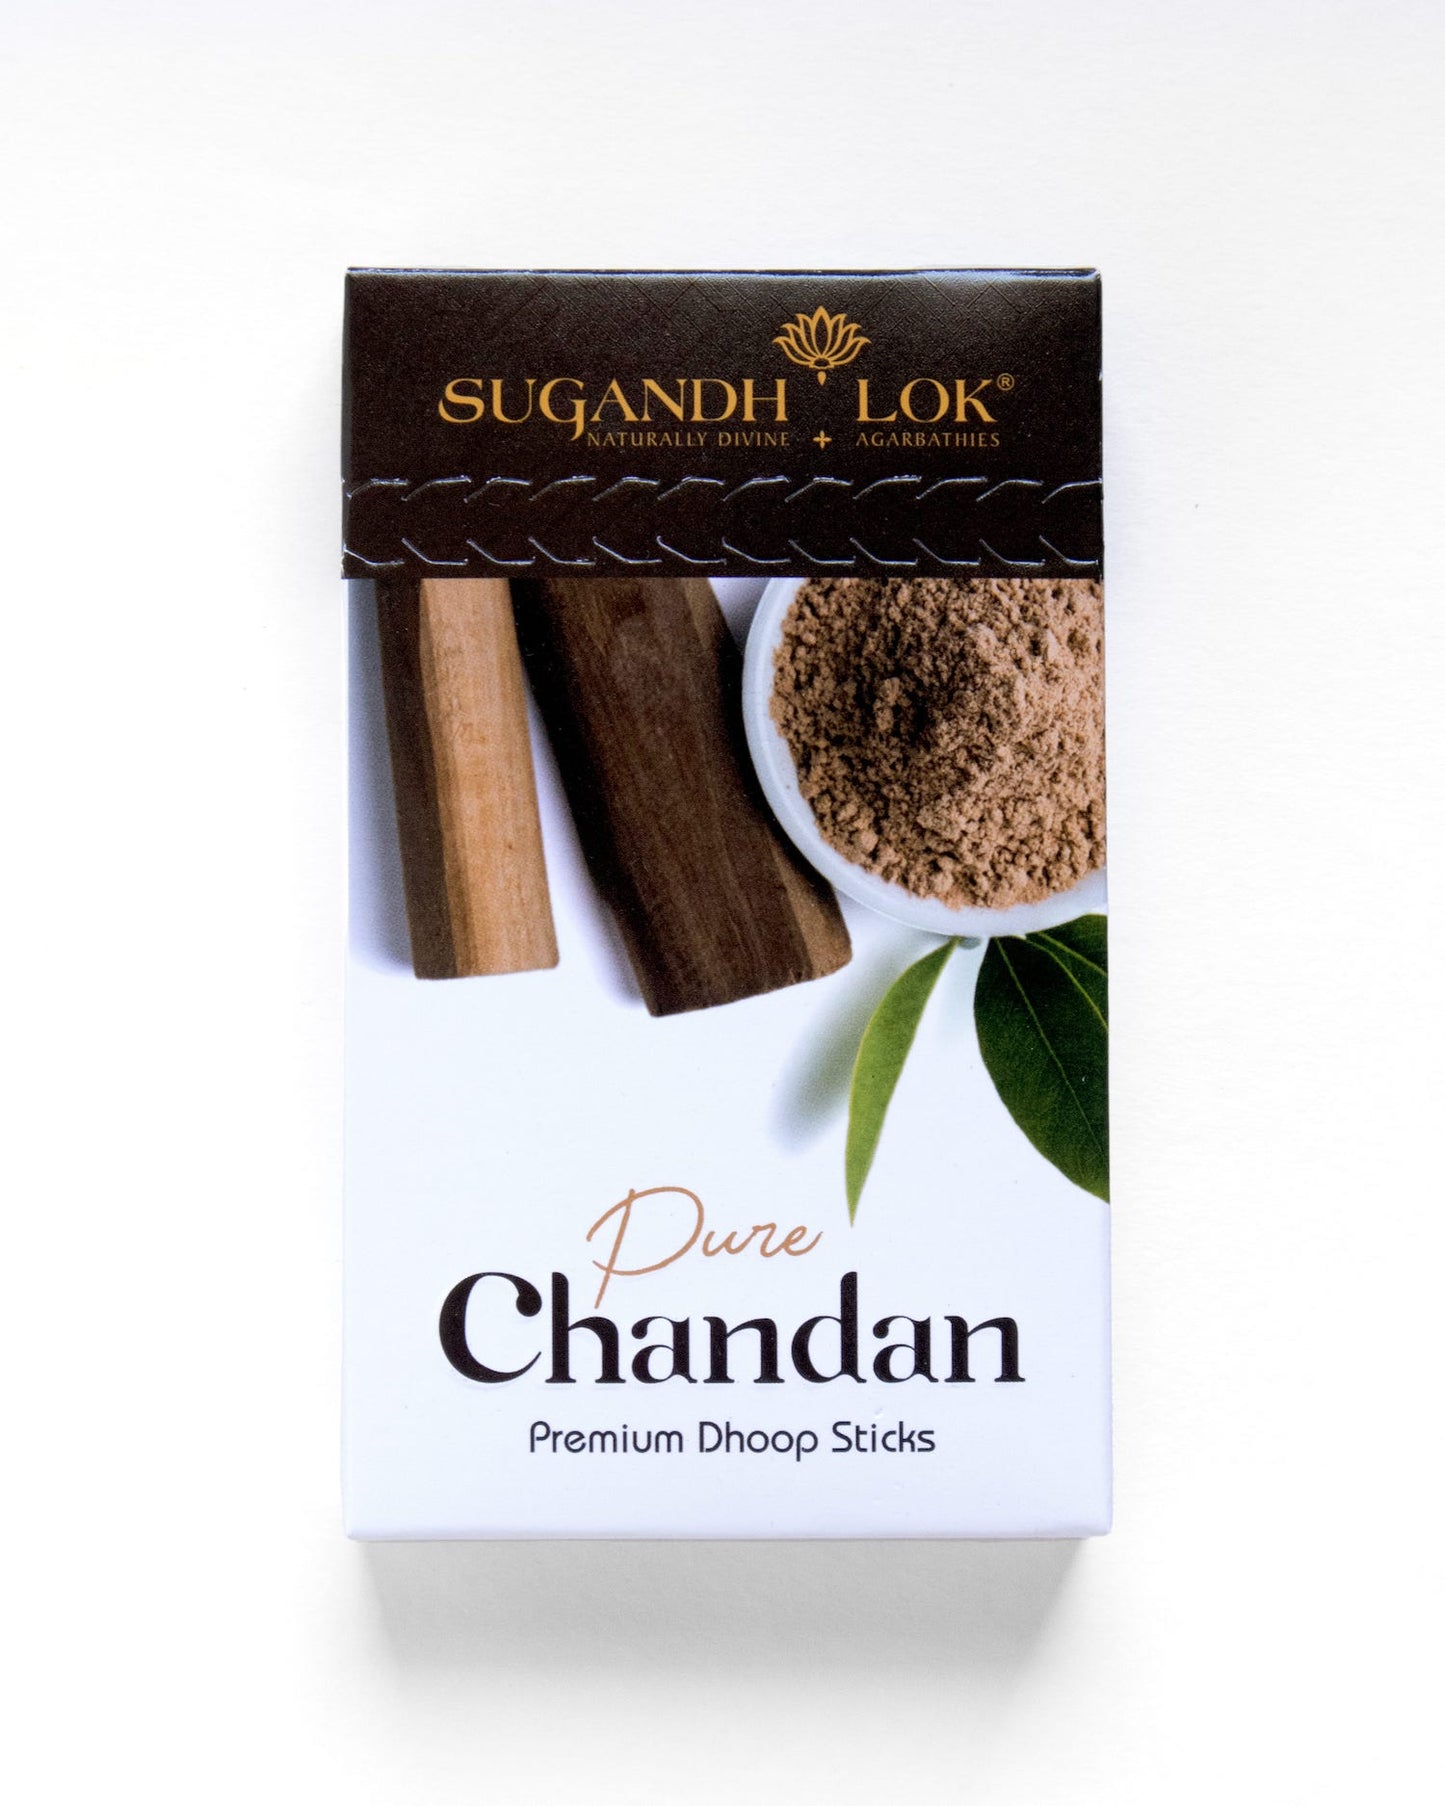 Pure Chandan Dhoop Sticks by Sugandh Lok